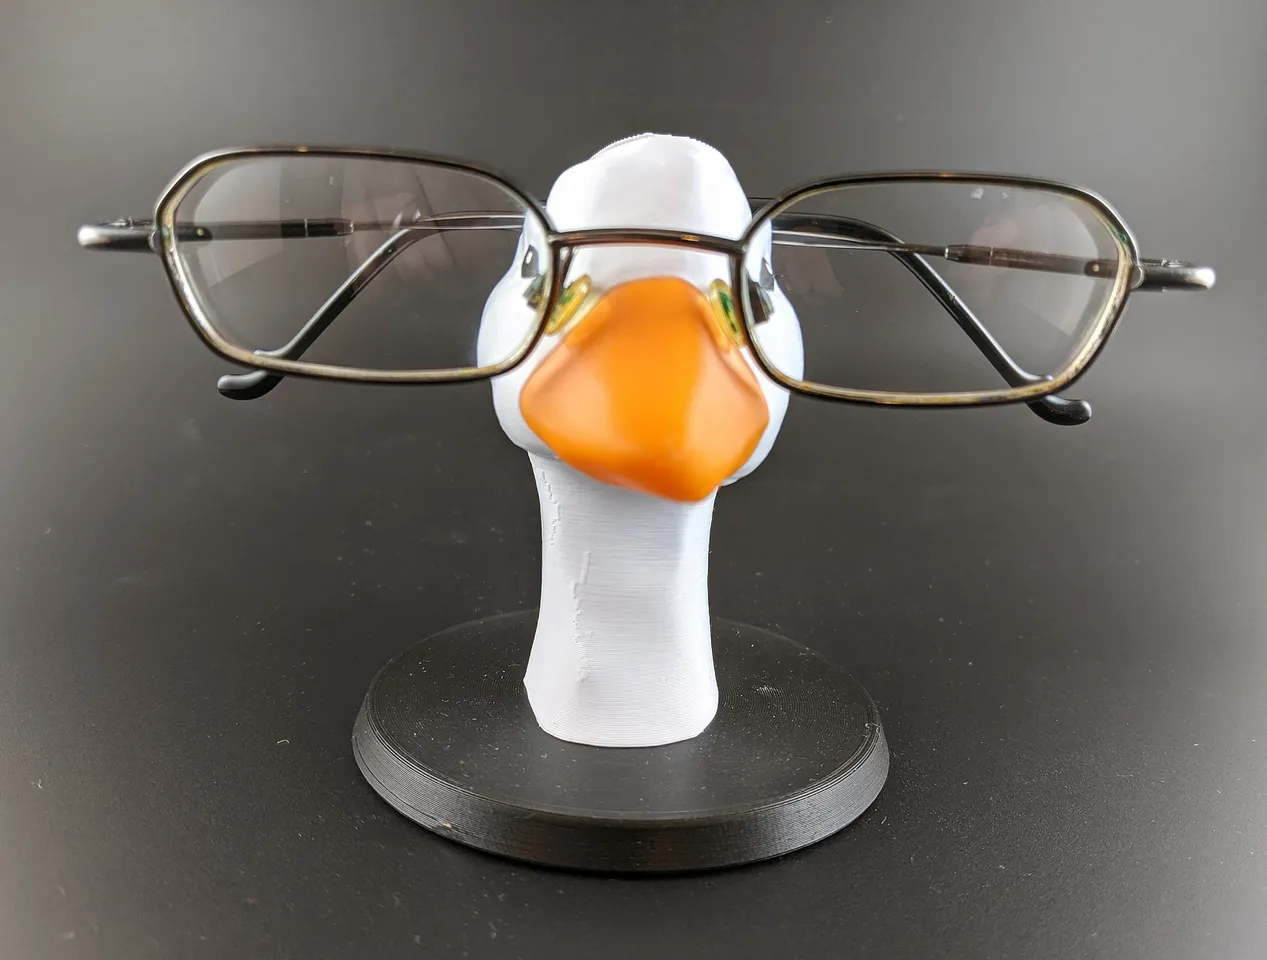 Horrible goose glasses holder by Billiam